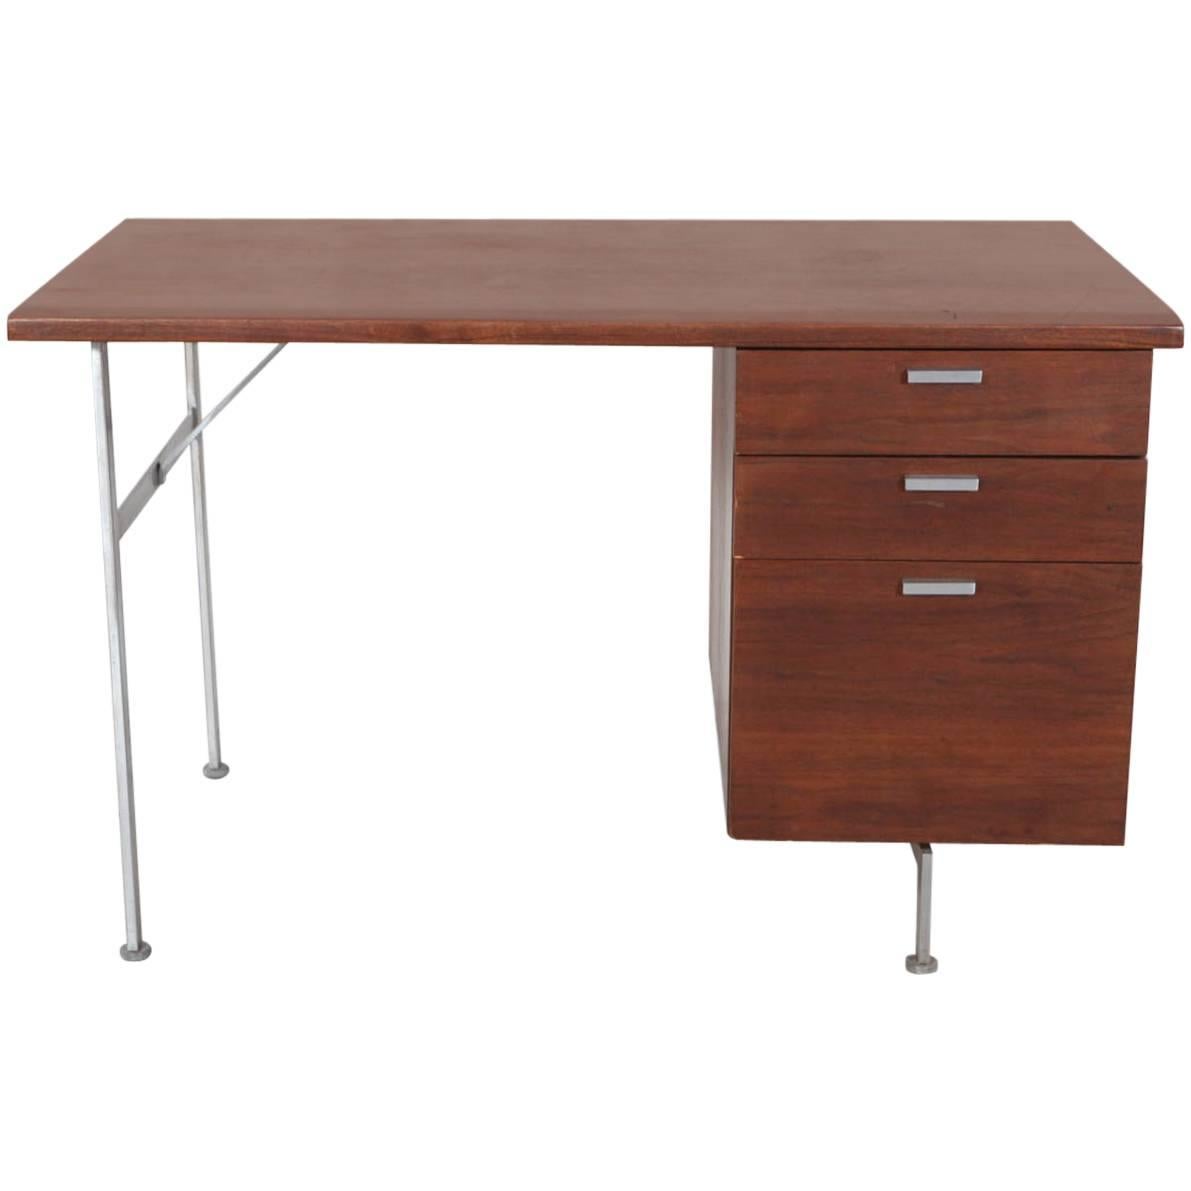 Midcentury Walnut and Stainless Steel Three-Drawer Desk